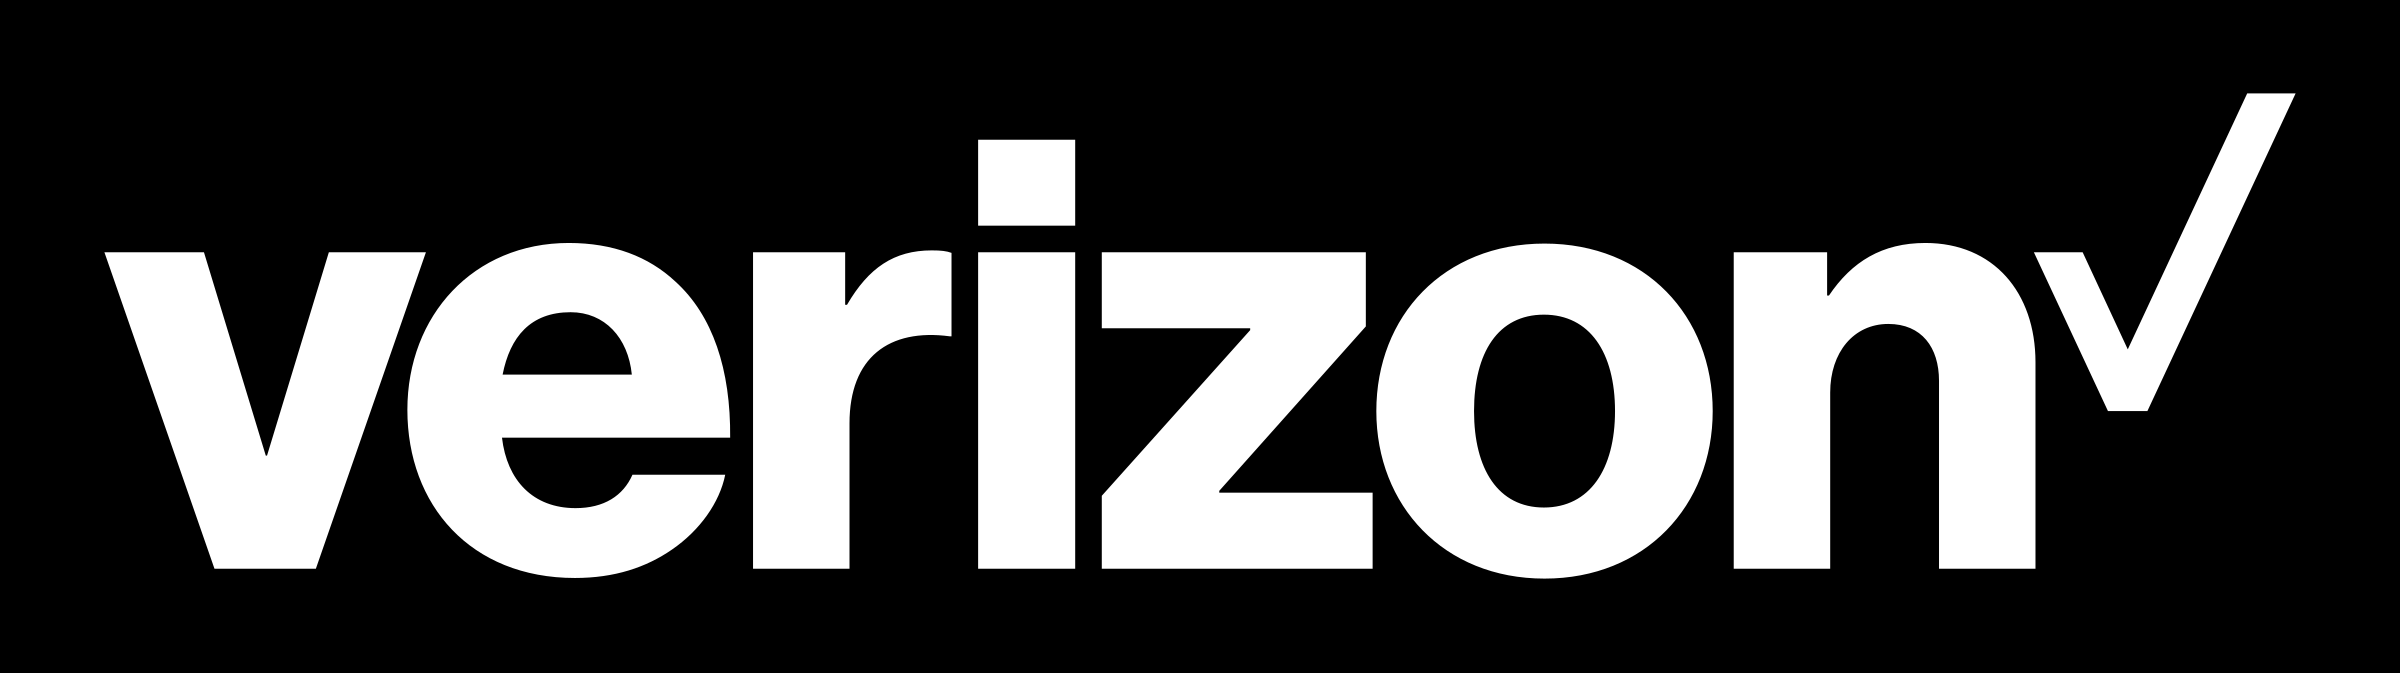 Verizon Logo - Verizon Logo PNG Transparent & SVG Vector - Freebie Supply